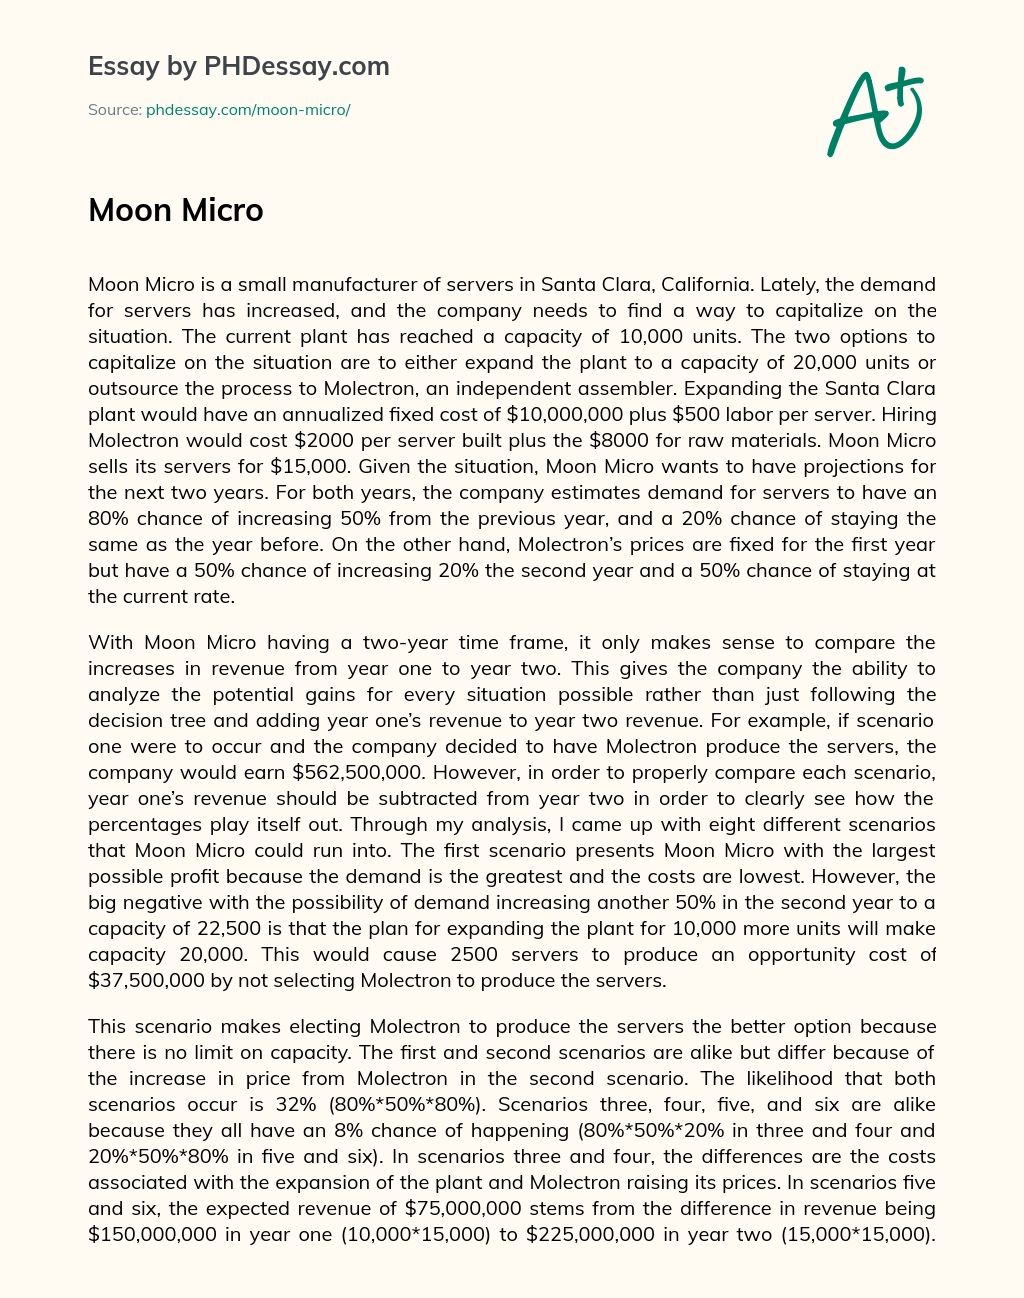 Moon Micro essay